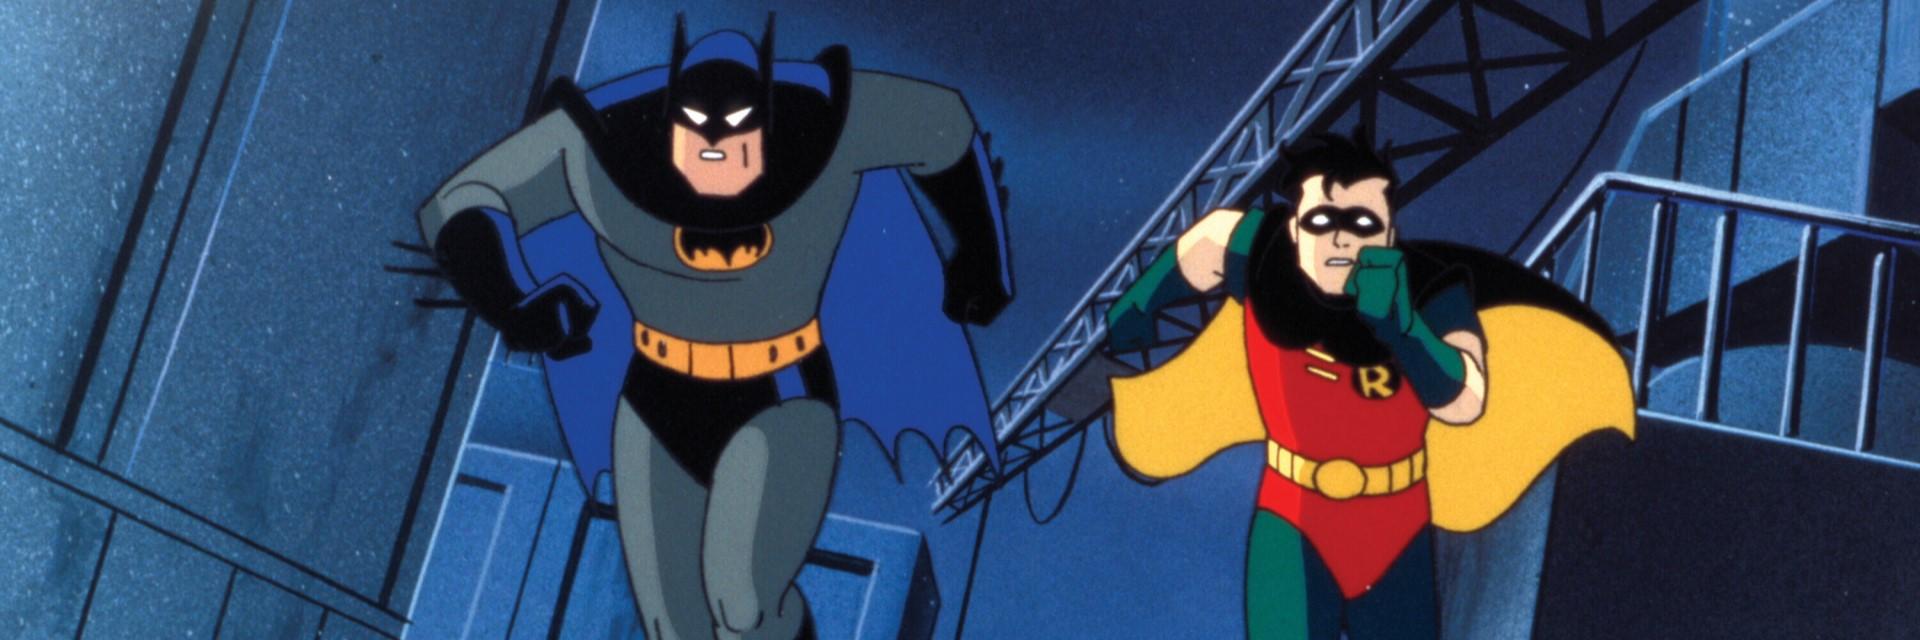 Robin, Batman, tekenfilm